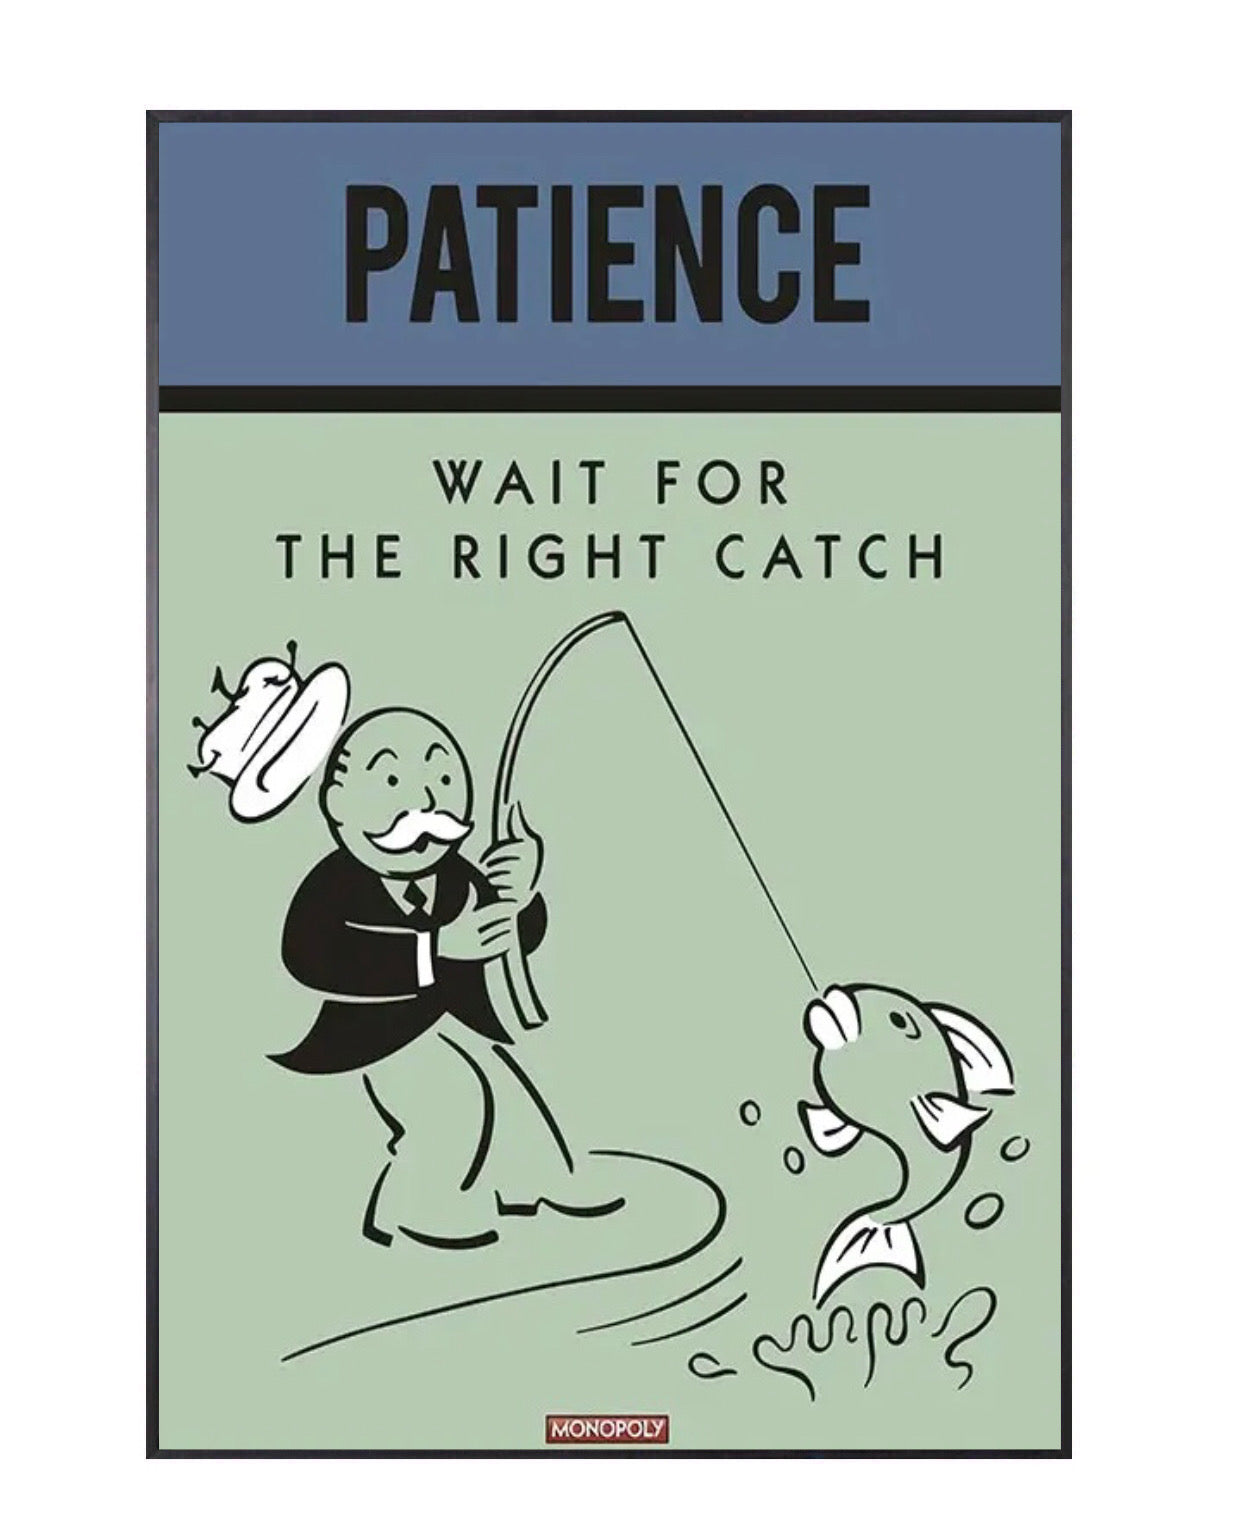 "patience" money poster